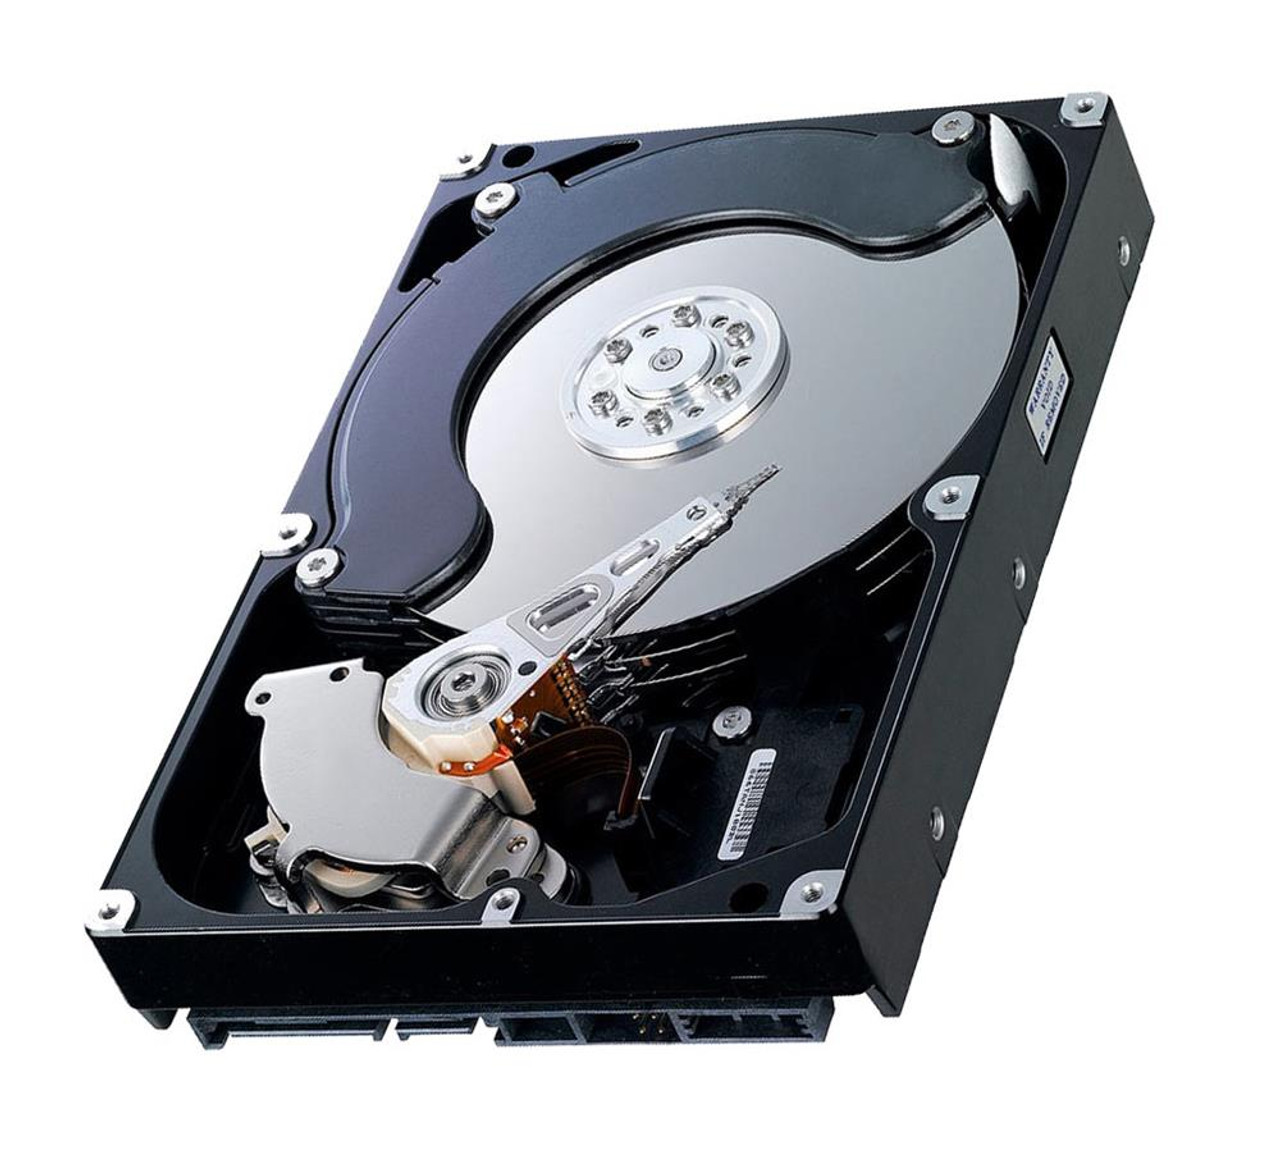 WD400AB-32BVA0 - Western Digital Caviar 40GB 5400RPM ATA-100 2MB Cache 3.5-inch Hard Disk Drive